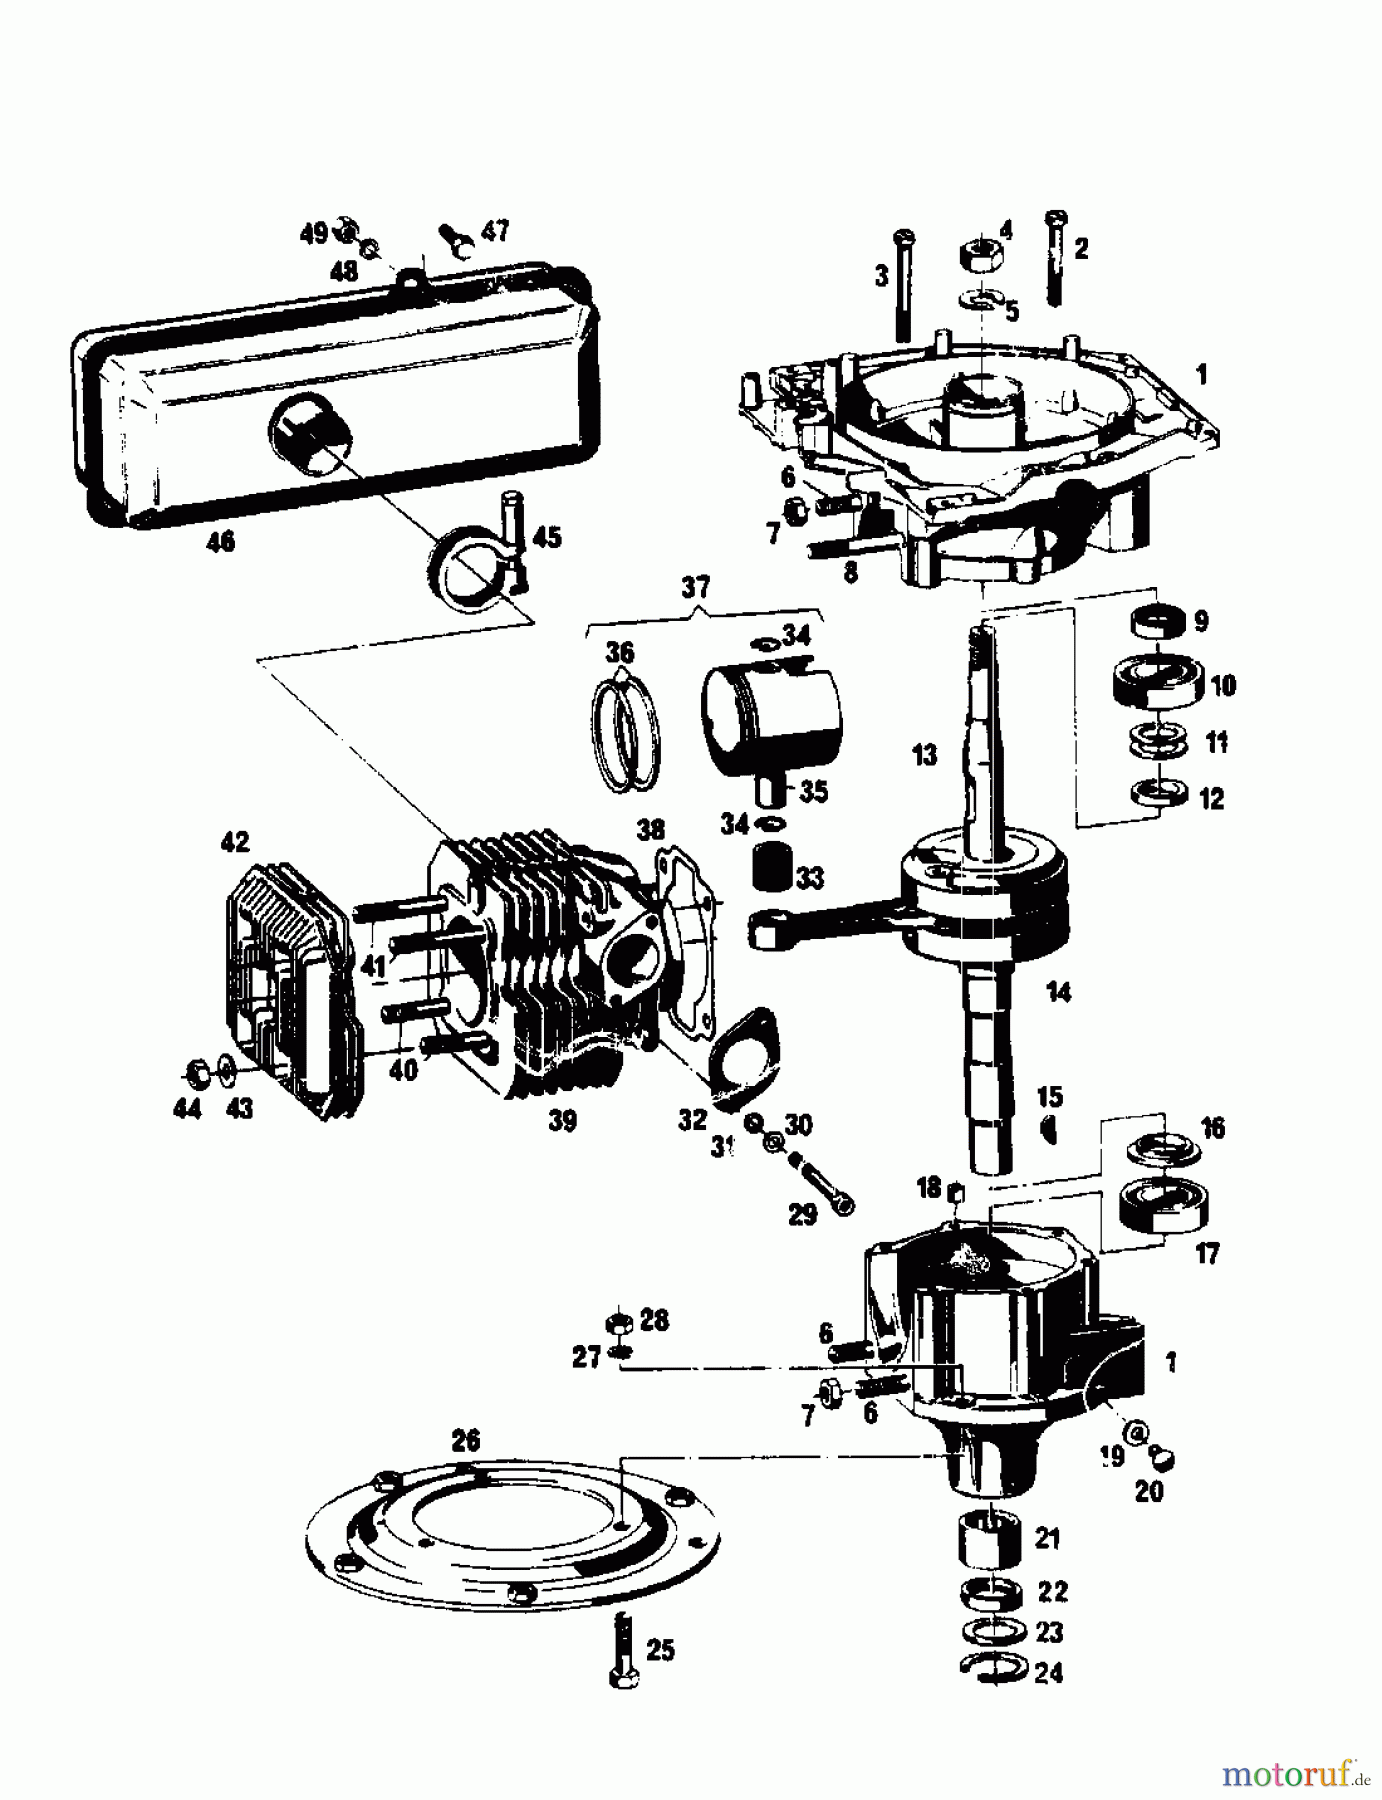  Gutbrod Motormäher mit Antrieb SB 51 R 02608.04  (1988) Kurbelgehäuse, Zylinder